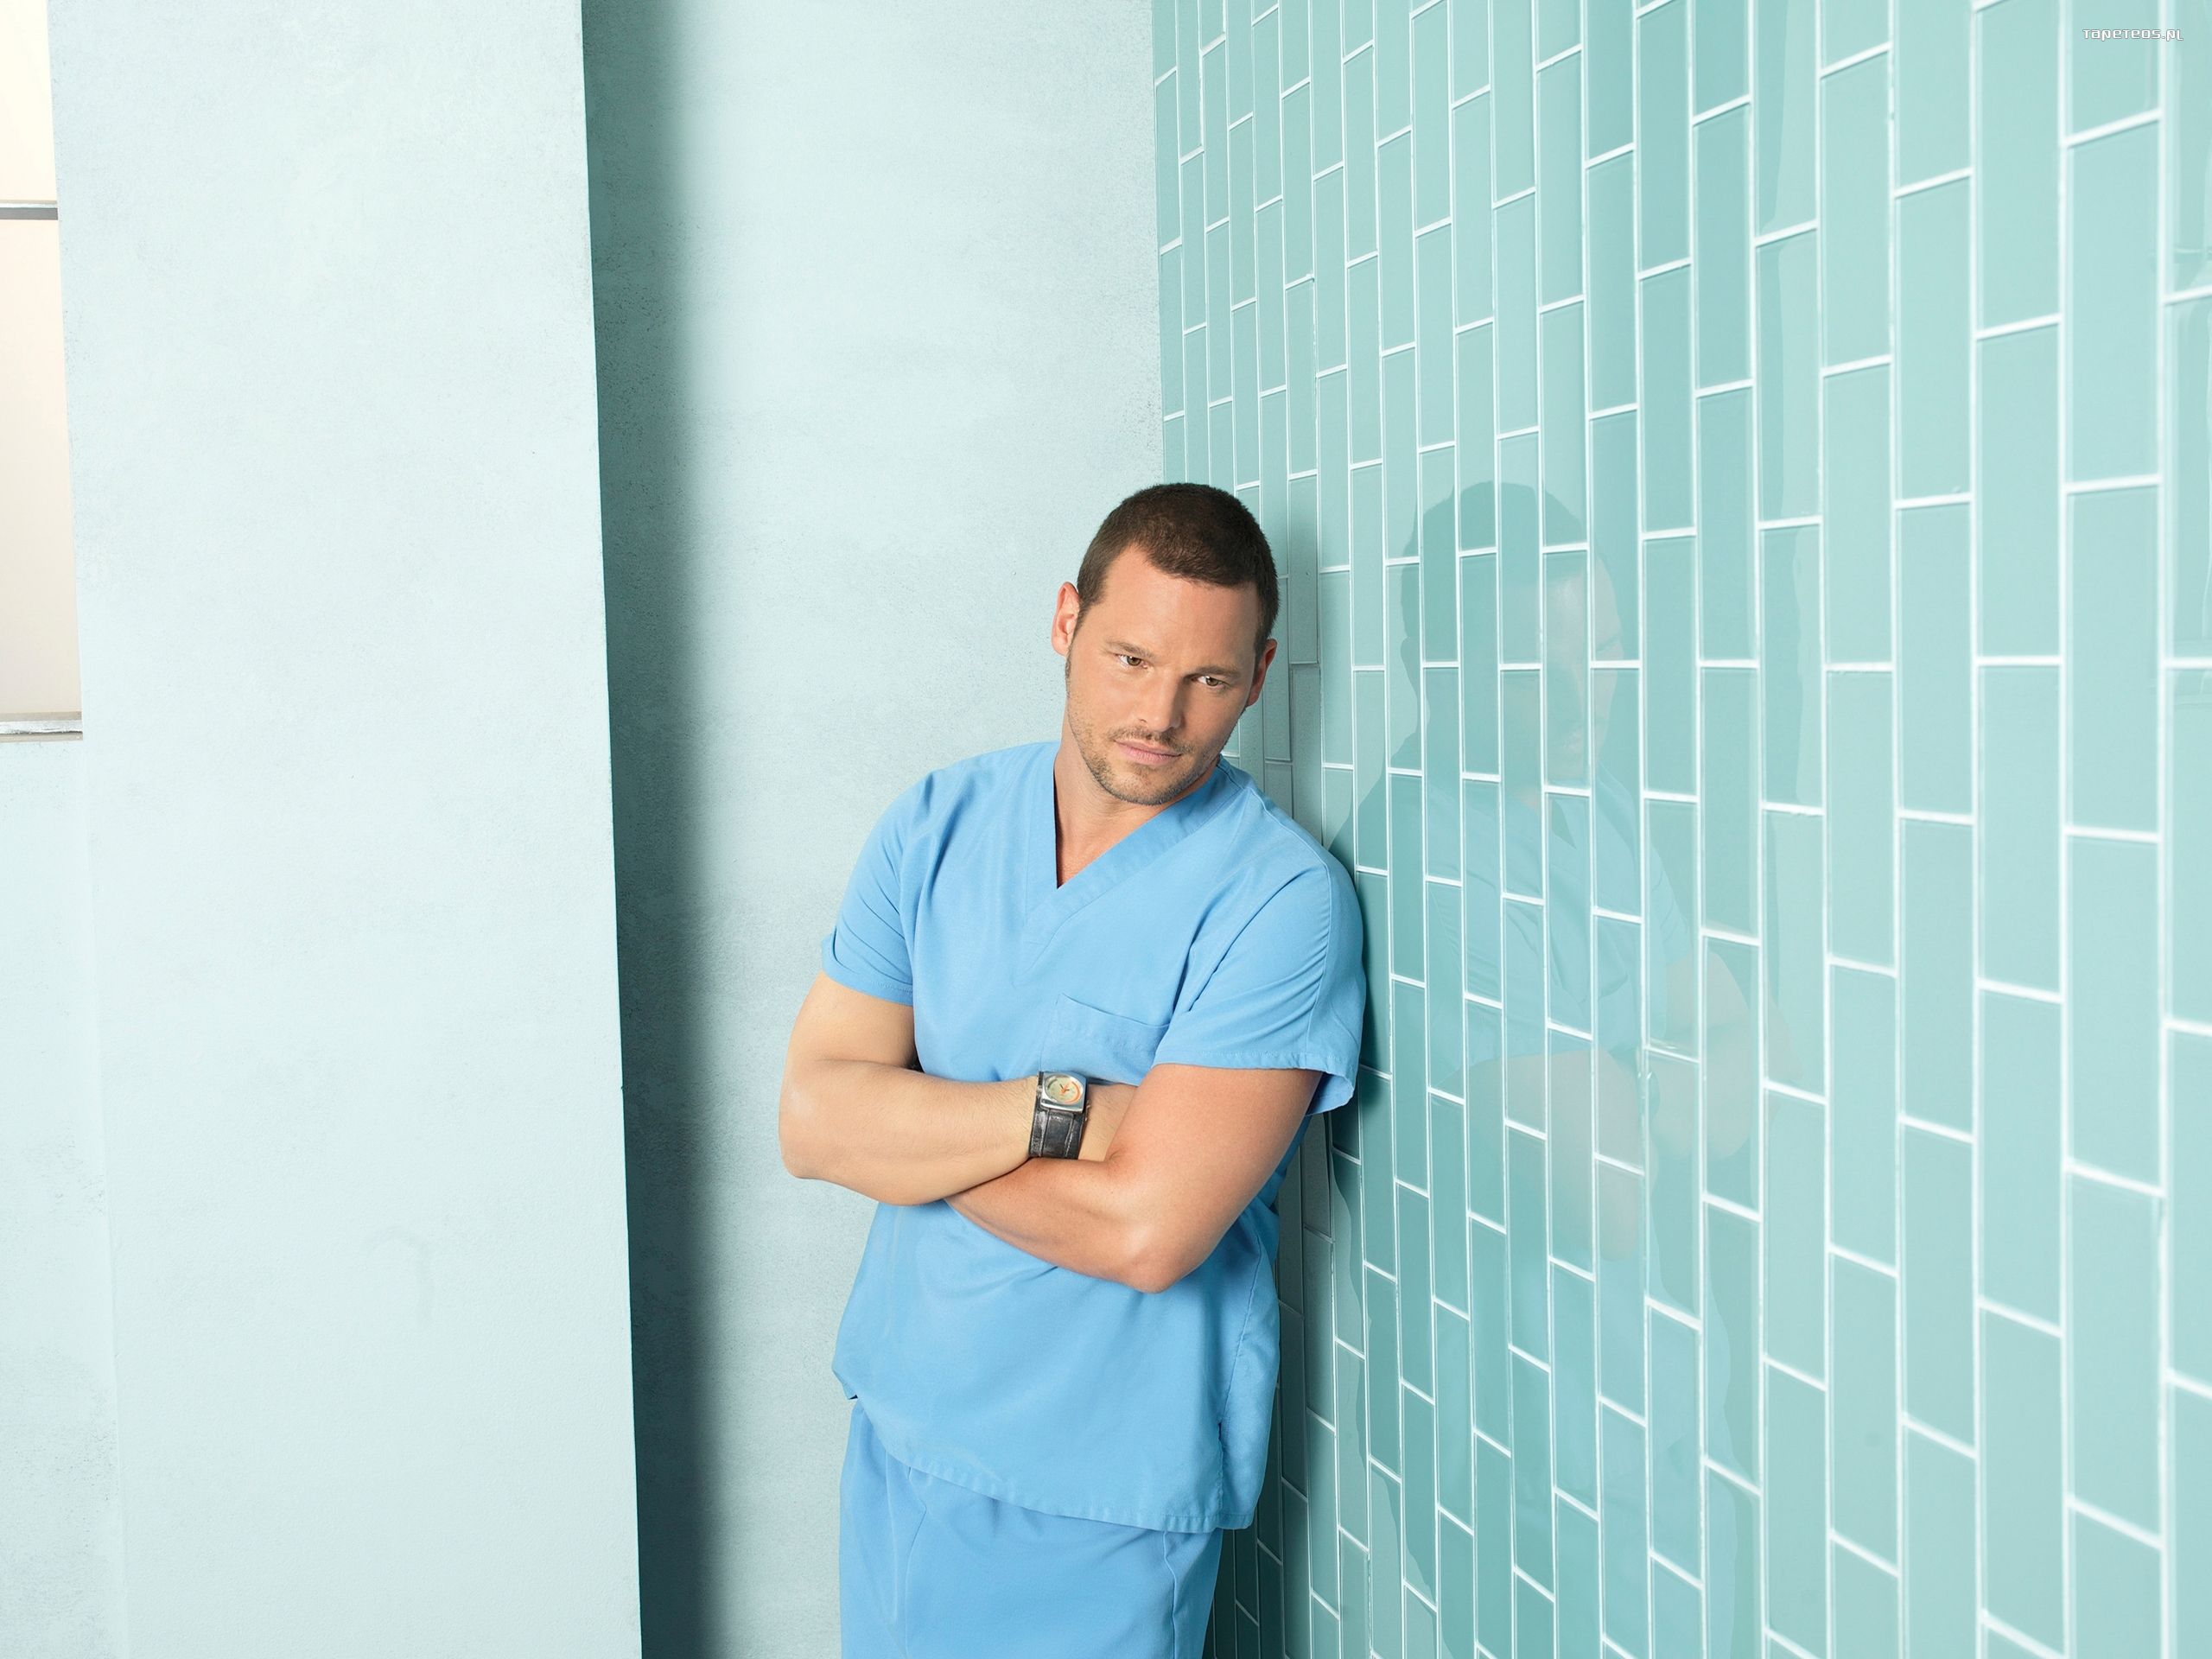 Chirurdzy, Greys Anatomy 022 Justin Chambers, Dr Alex Karev